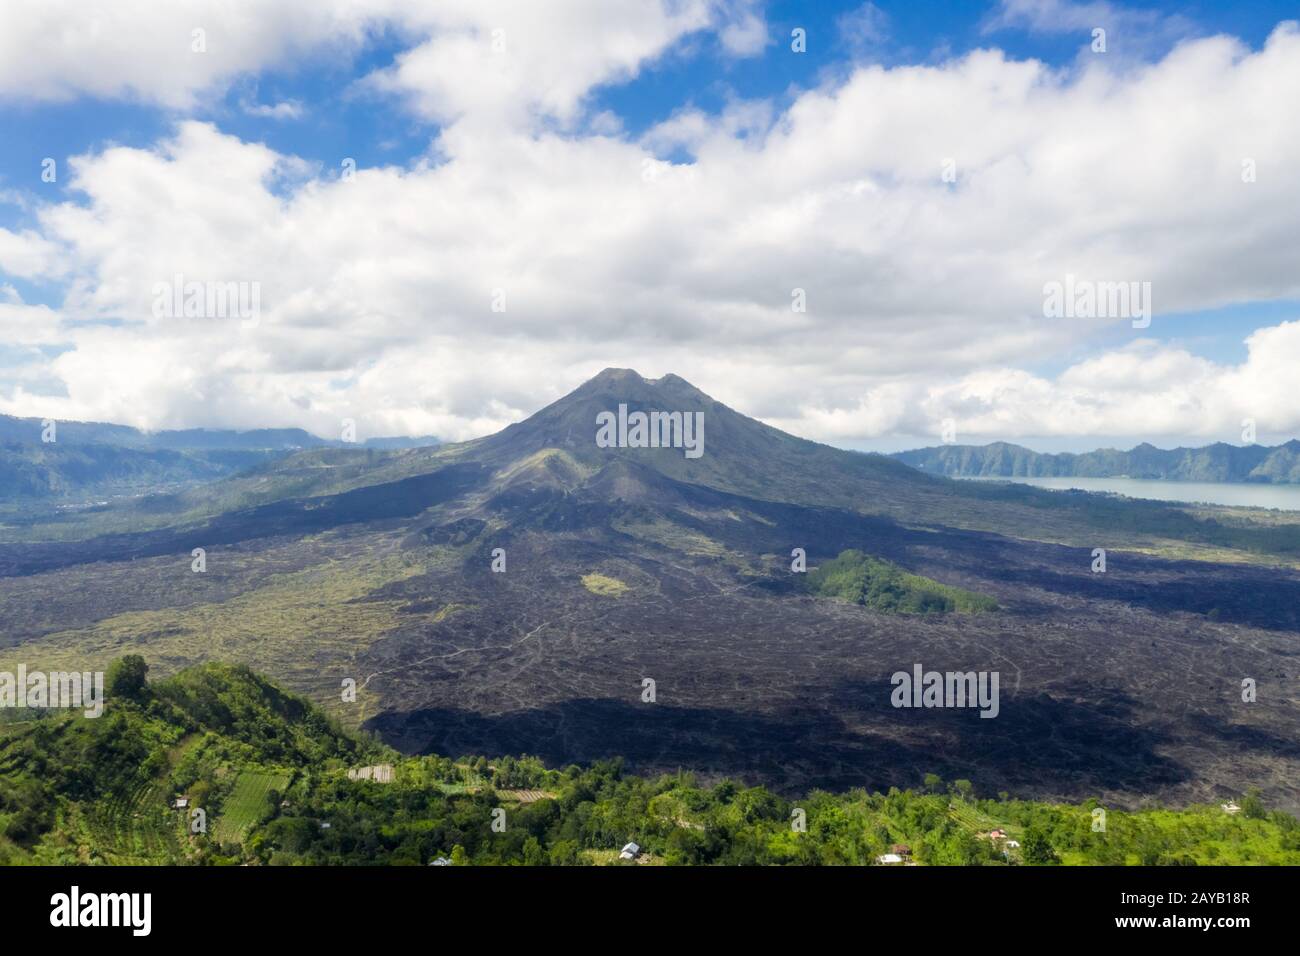 Mount agung landscape Stock Photo